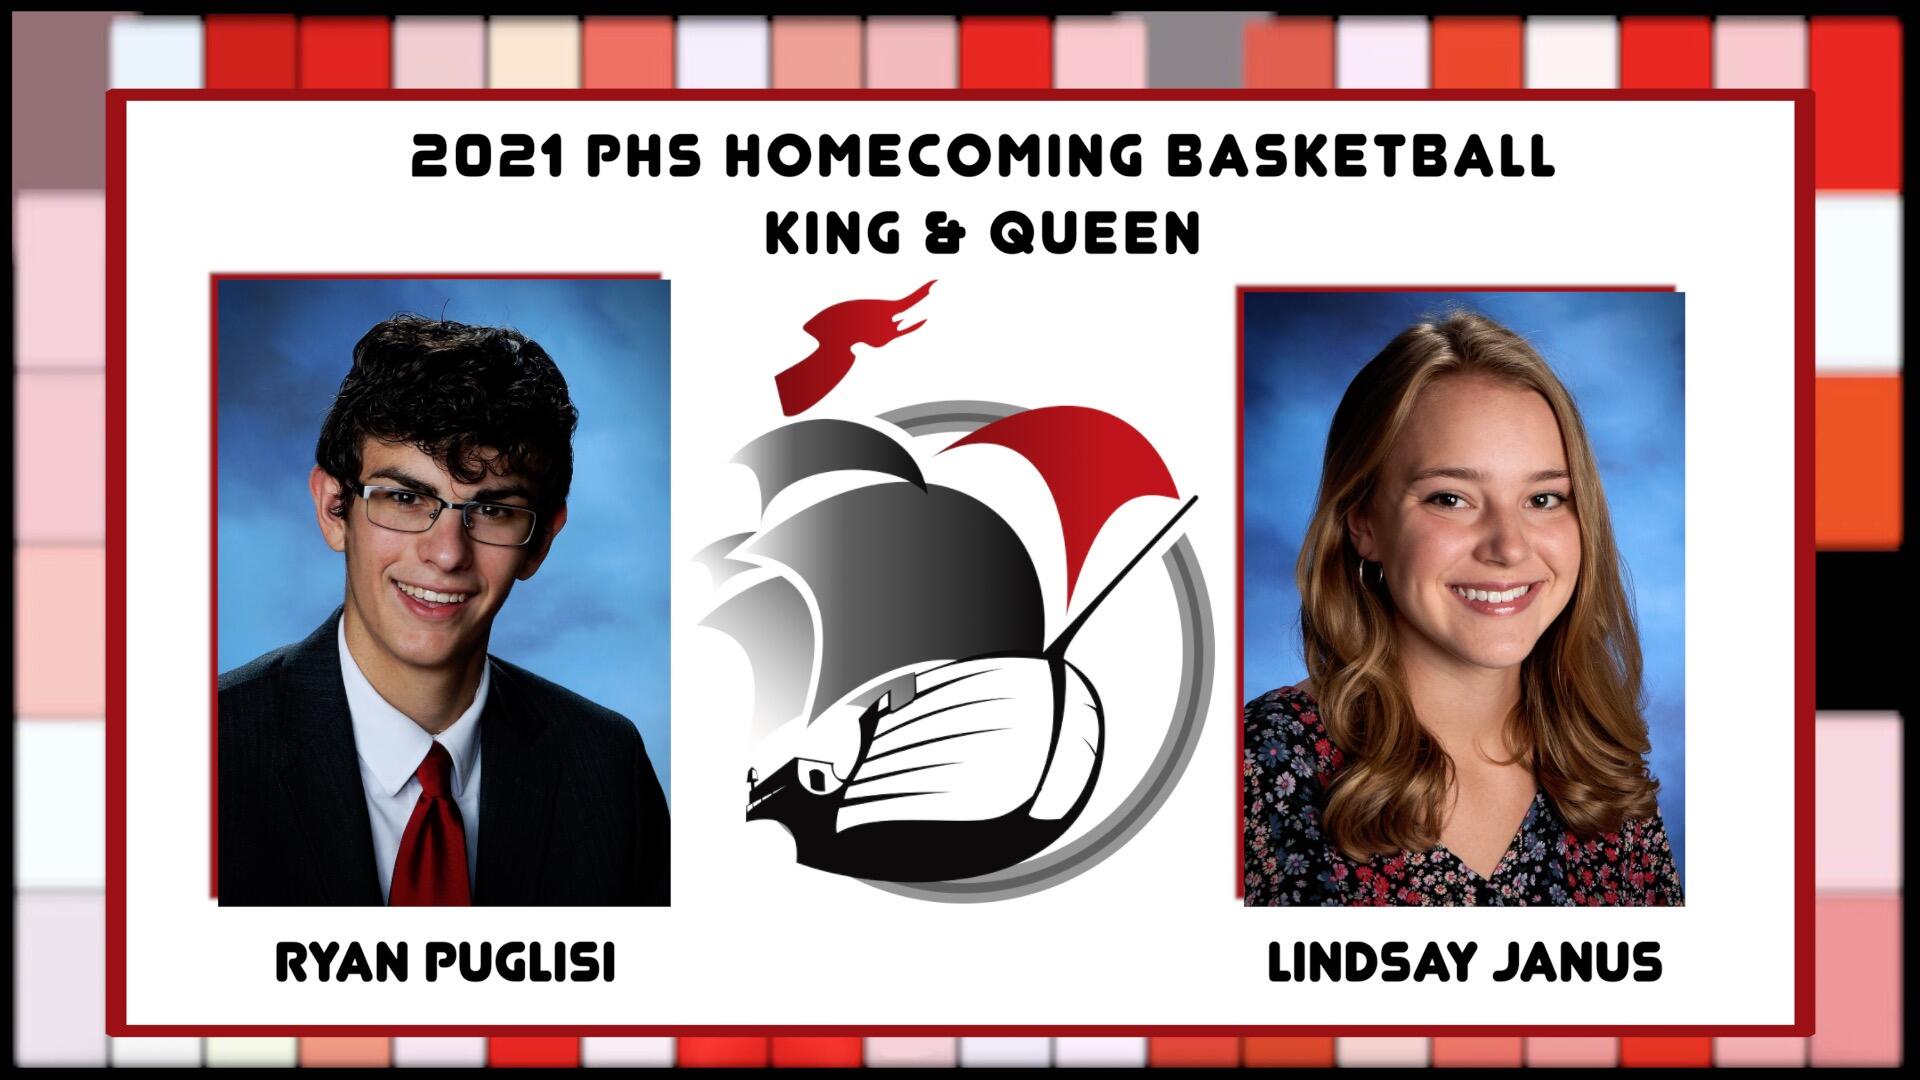 2021 PHS Homecoming Basketball King and Queen - Ryan Puglisi and Lindsay Janus with PHS ship logo